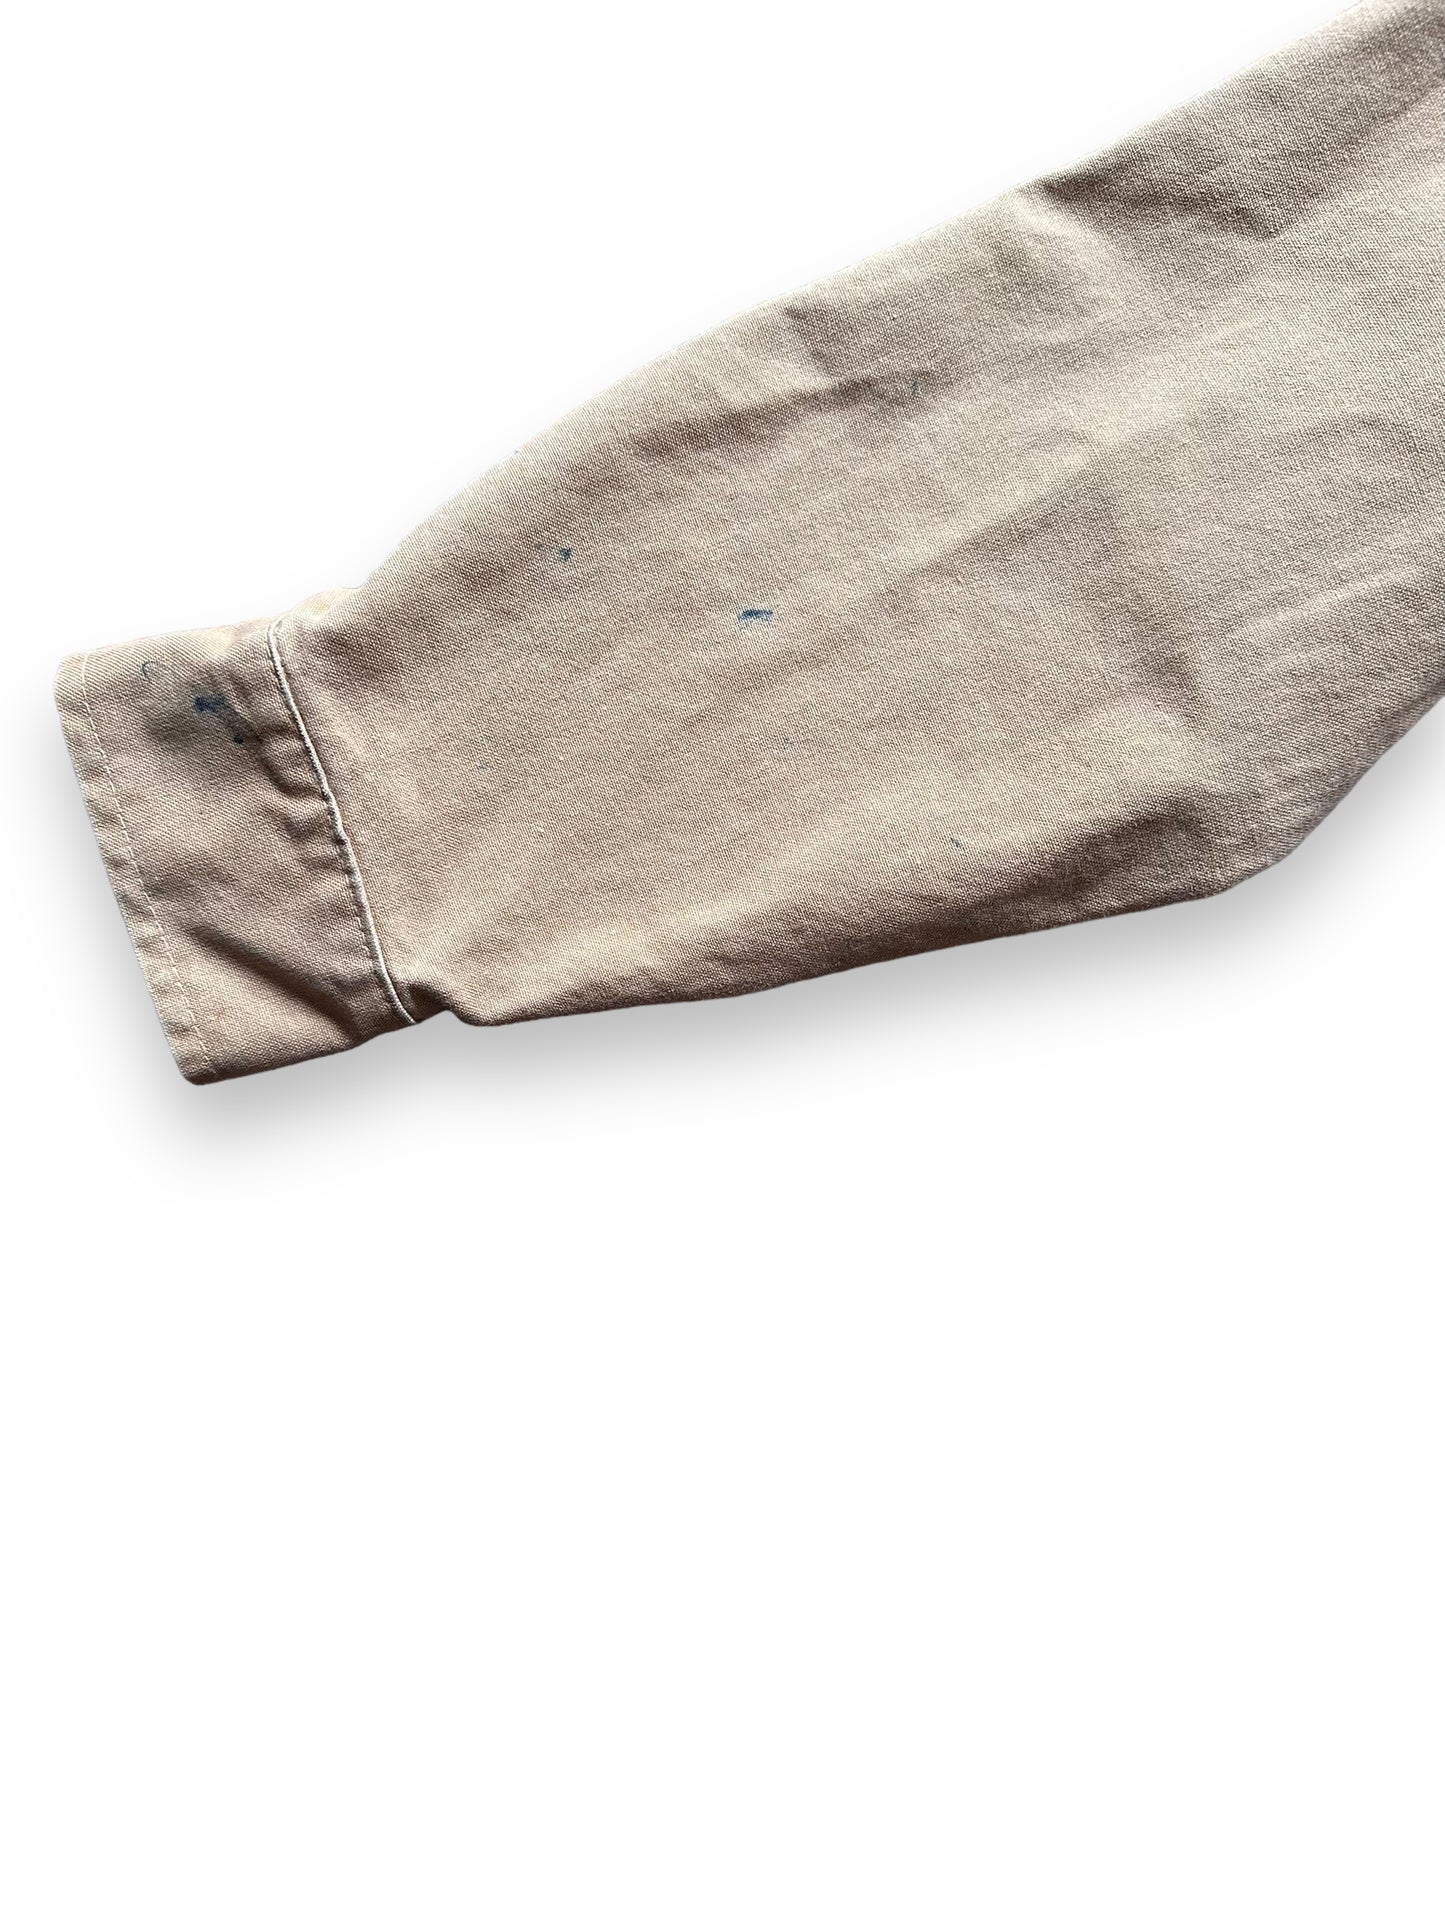 sleeve blemishes right sleeve of Vintage Filson Canvas Shirt |  Barn Owl Vintage Goods | Vintage Filson Workwear Seattle